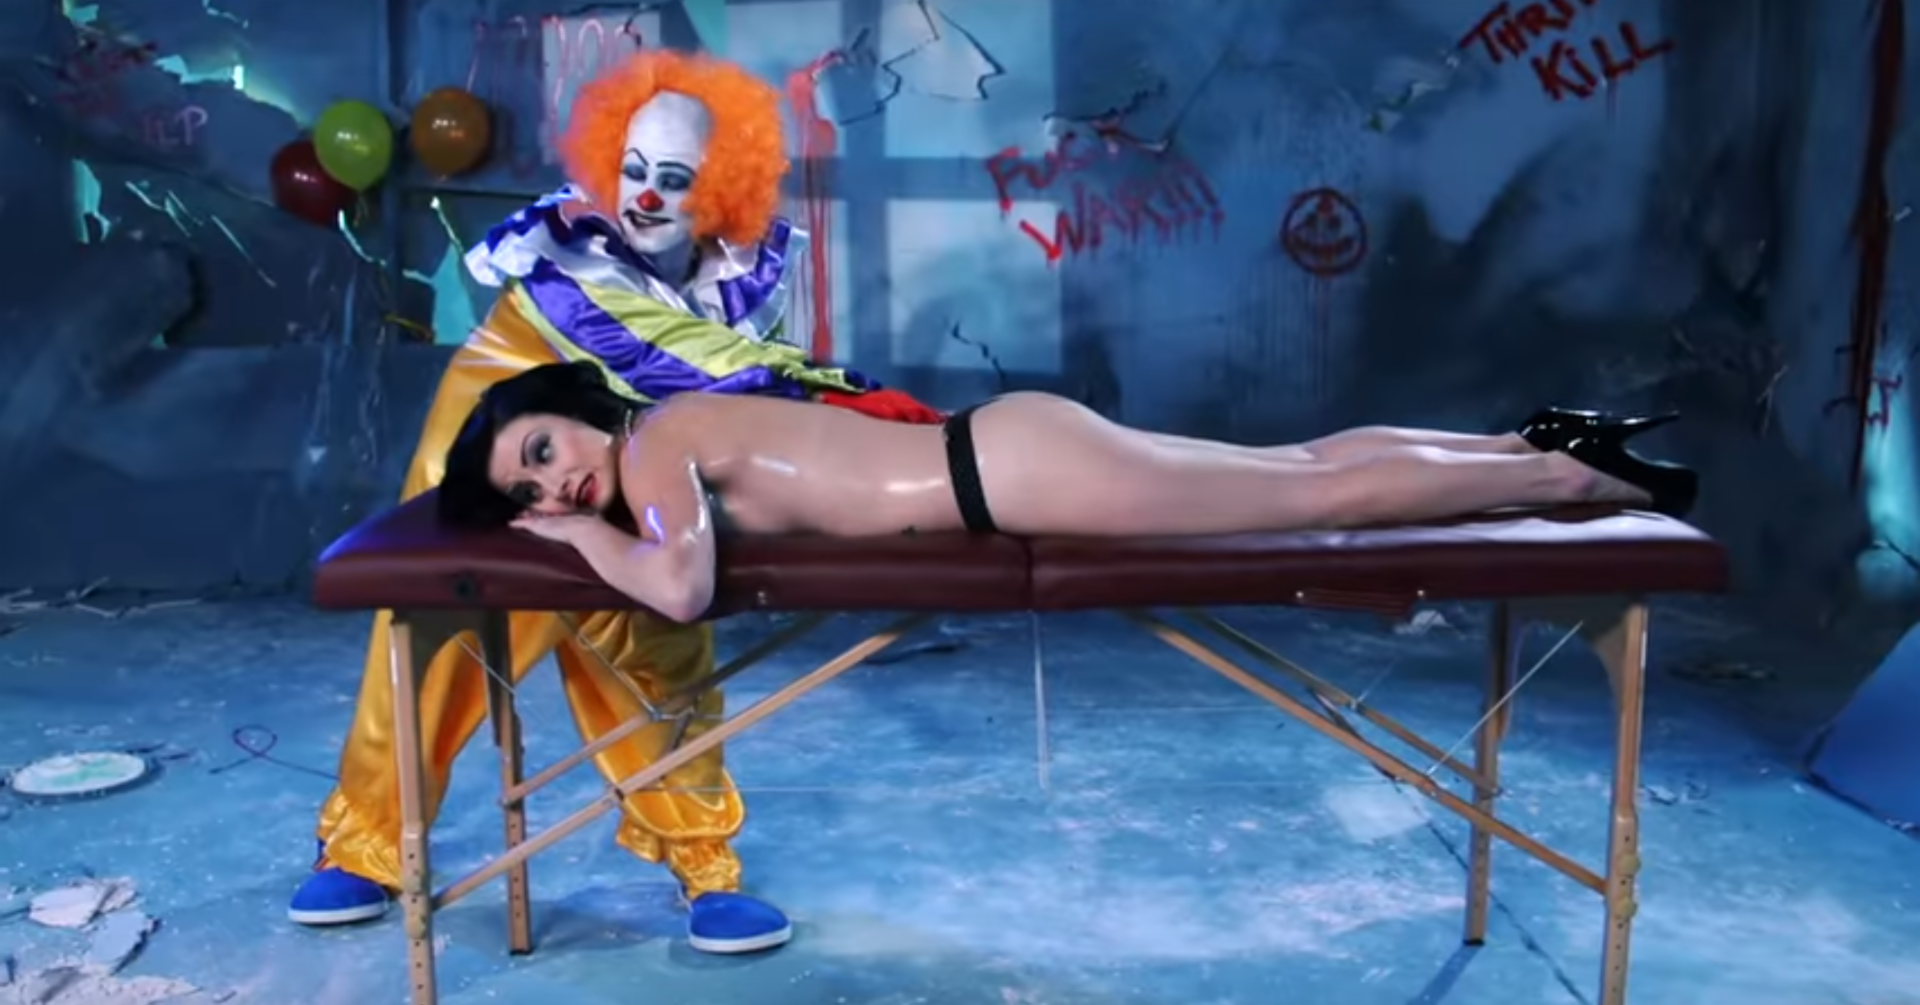 Scary Clown Porn - Watch This Hilarious SFW Trailer for a Clown-Themed Porn Movie - Maxim